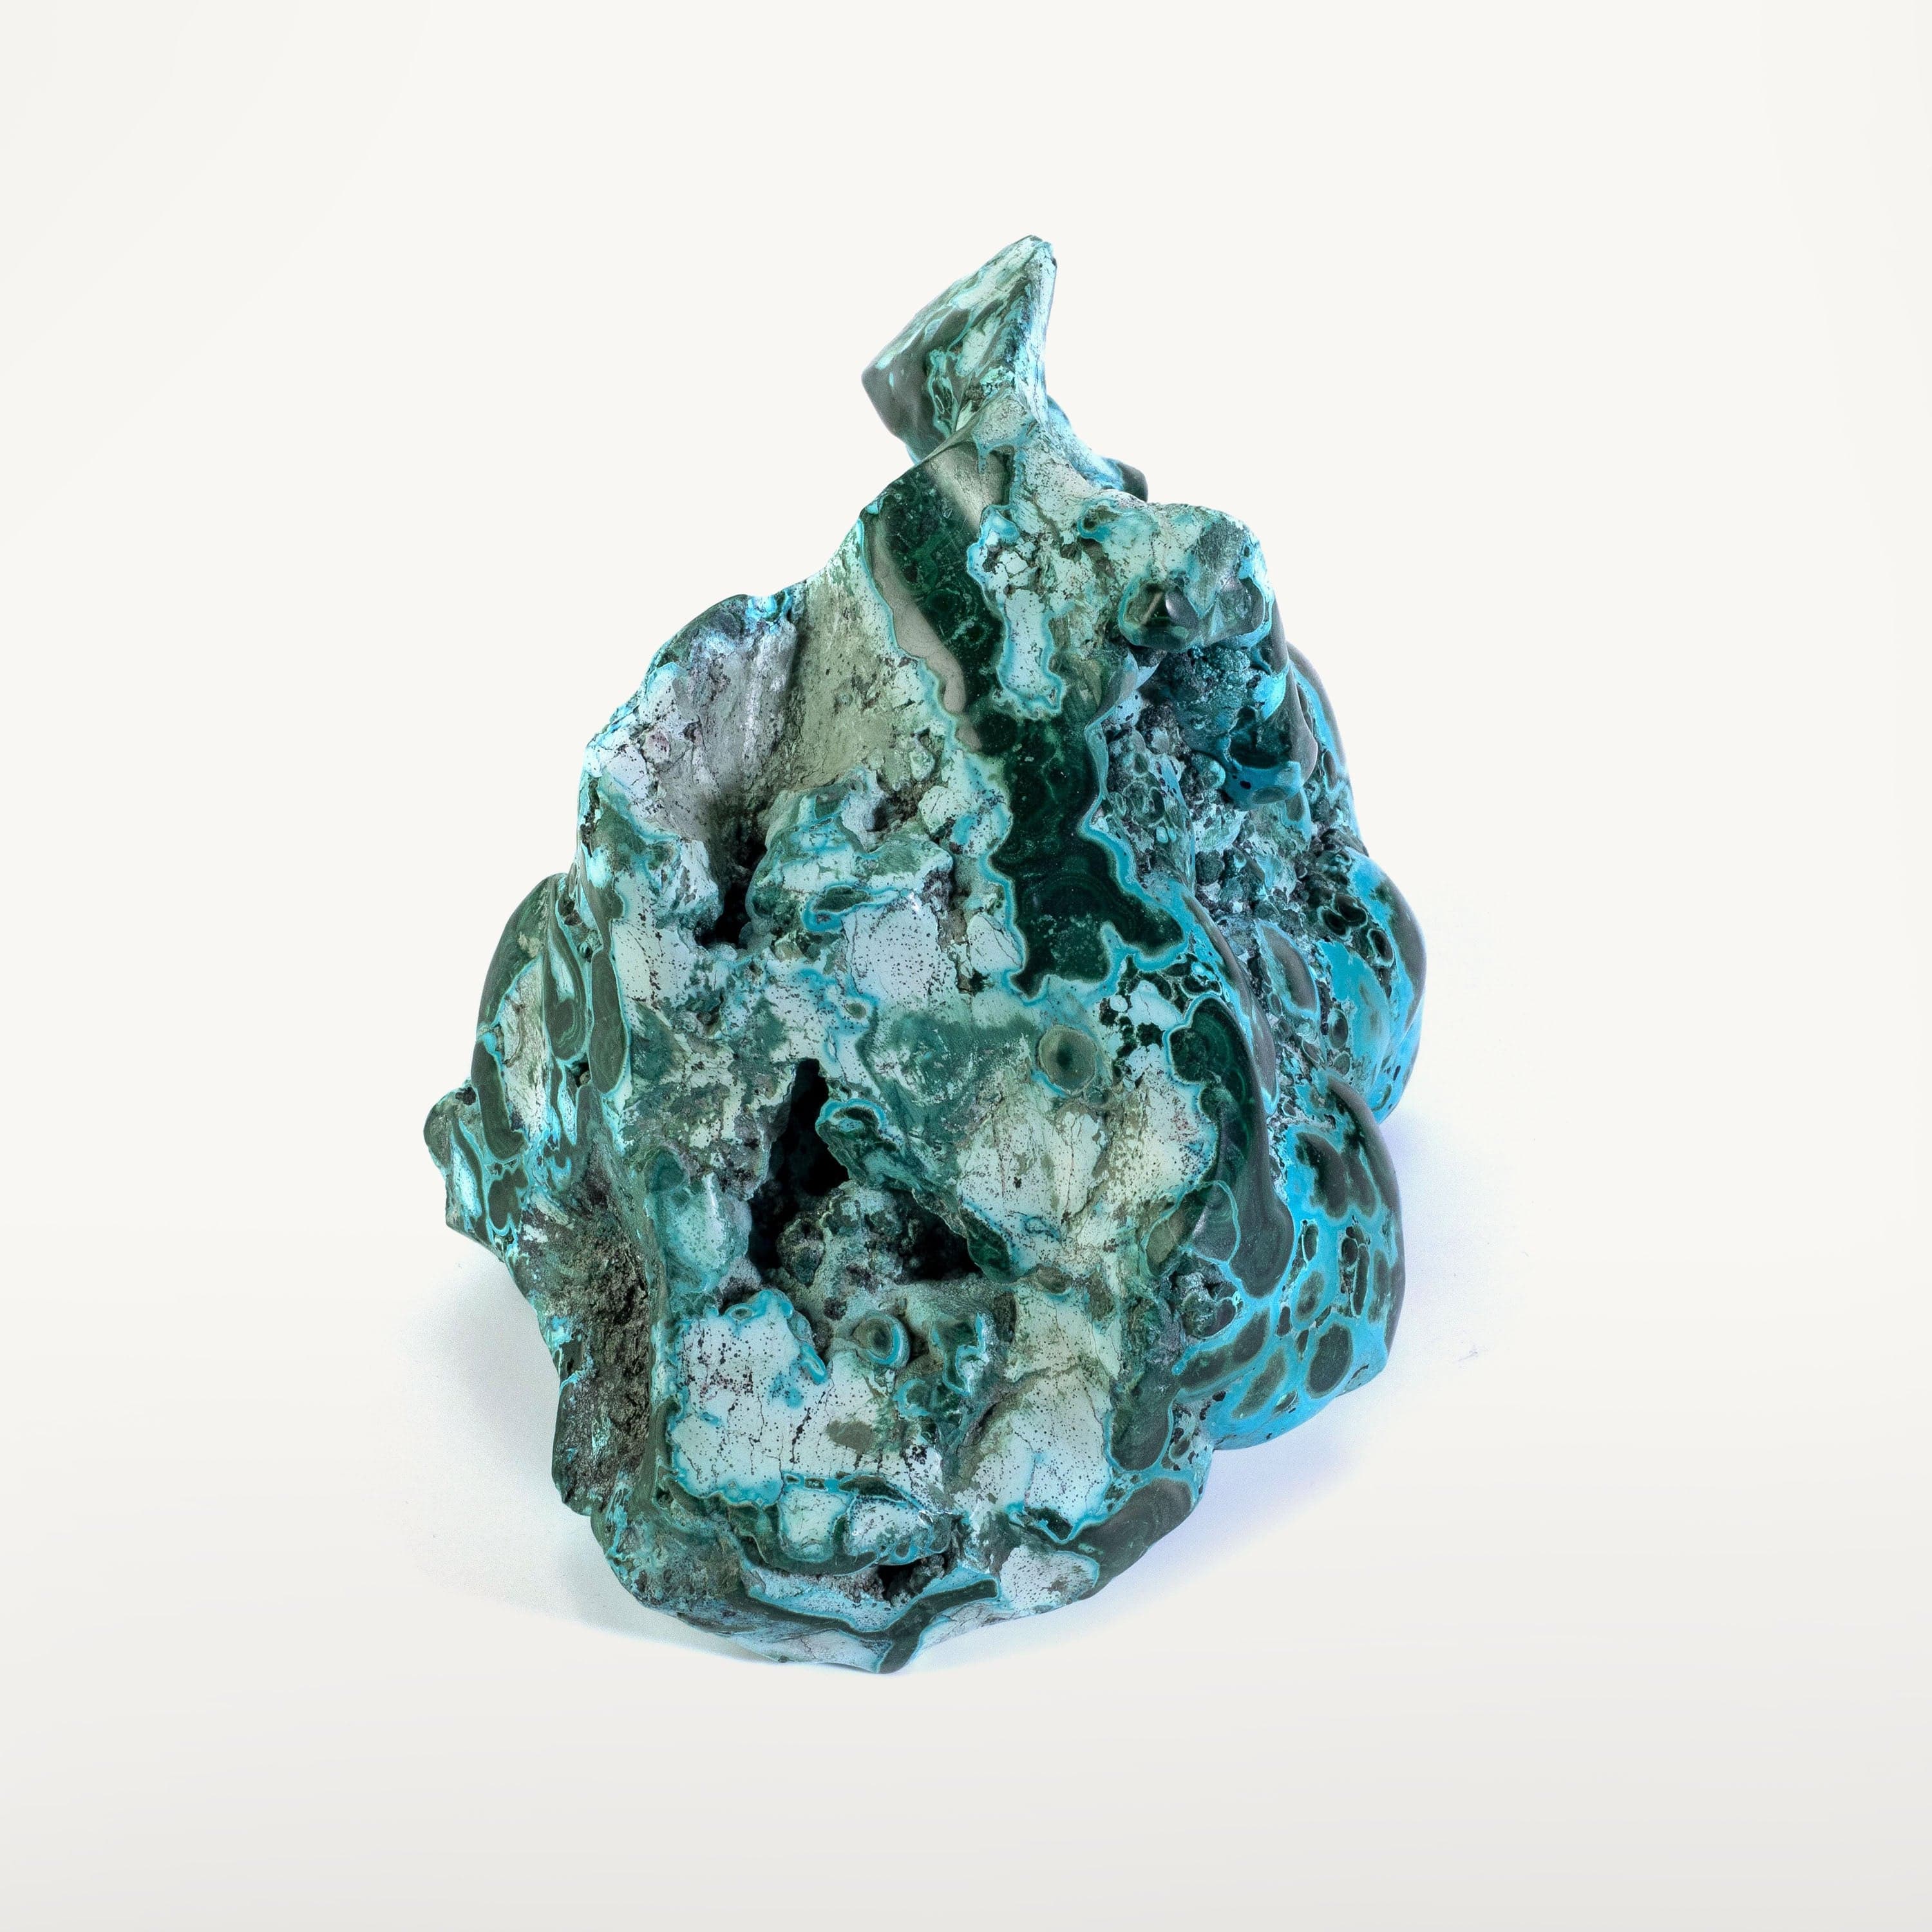 Kalifano Malachite Rare Natural Green Malachite with Blue Chrysocolla Freeform Specimen from Congo - 1.9 kg / 4.1 lbs MAC1700.002